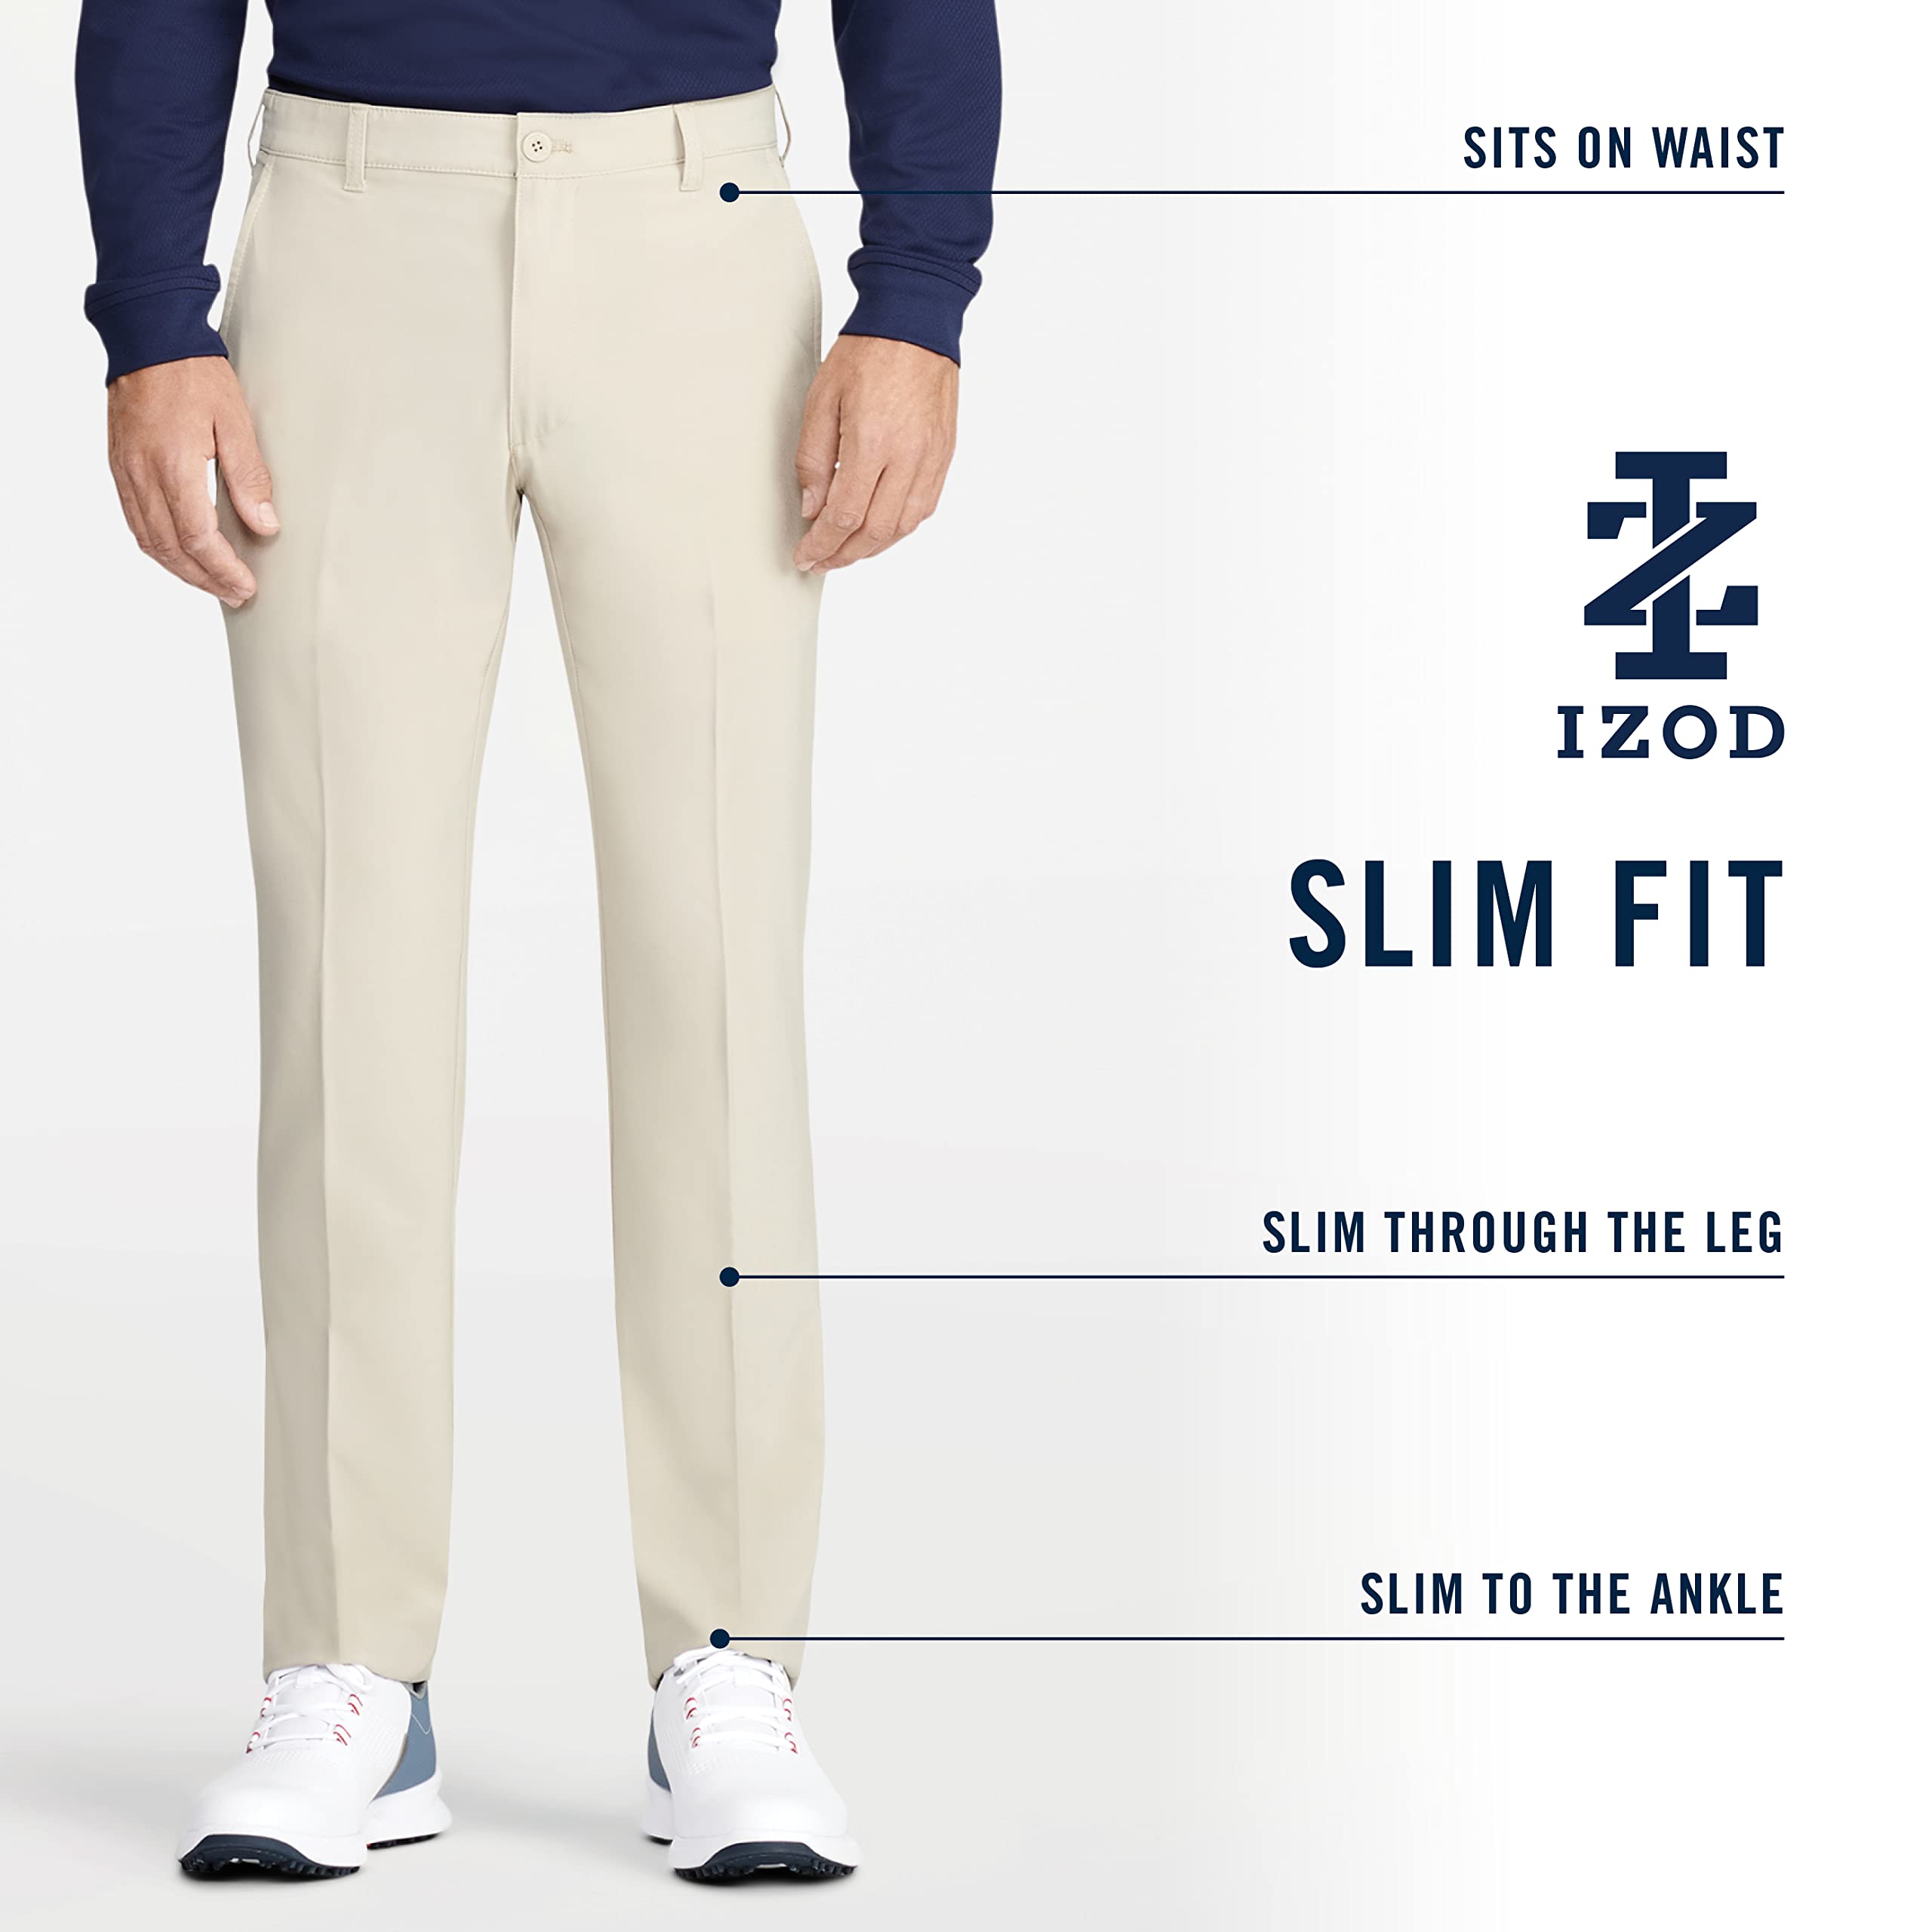 Izod Men's Slim Fit Golf Swingflex Pant